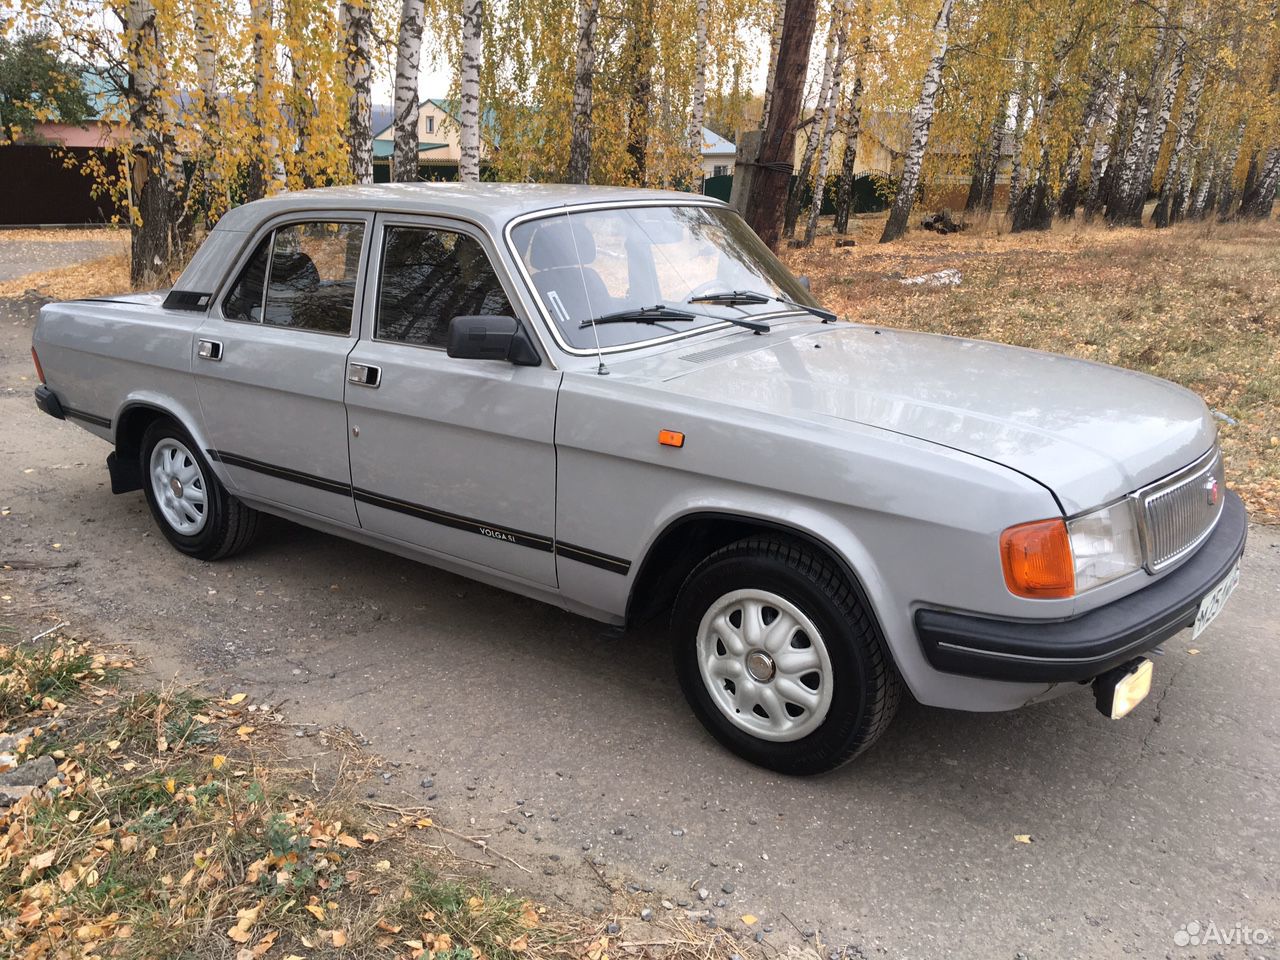  ГАЗ 31029 Волга, 1997 